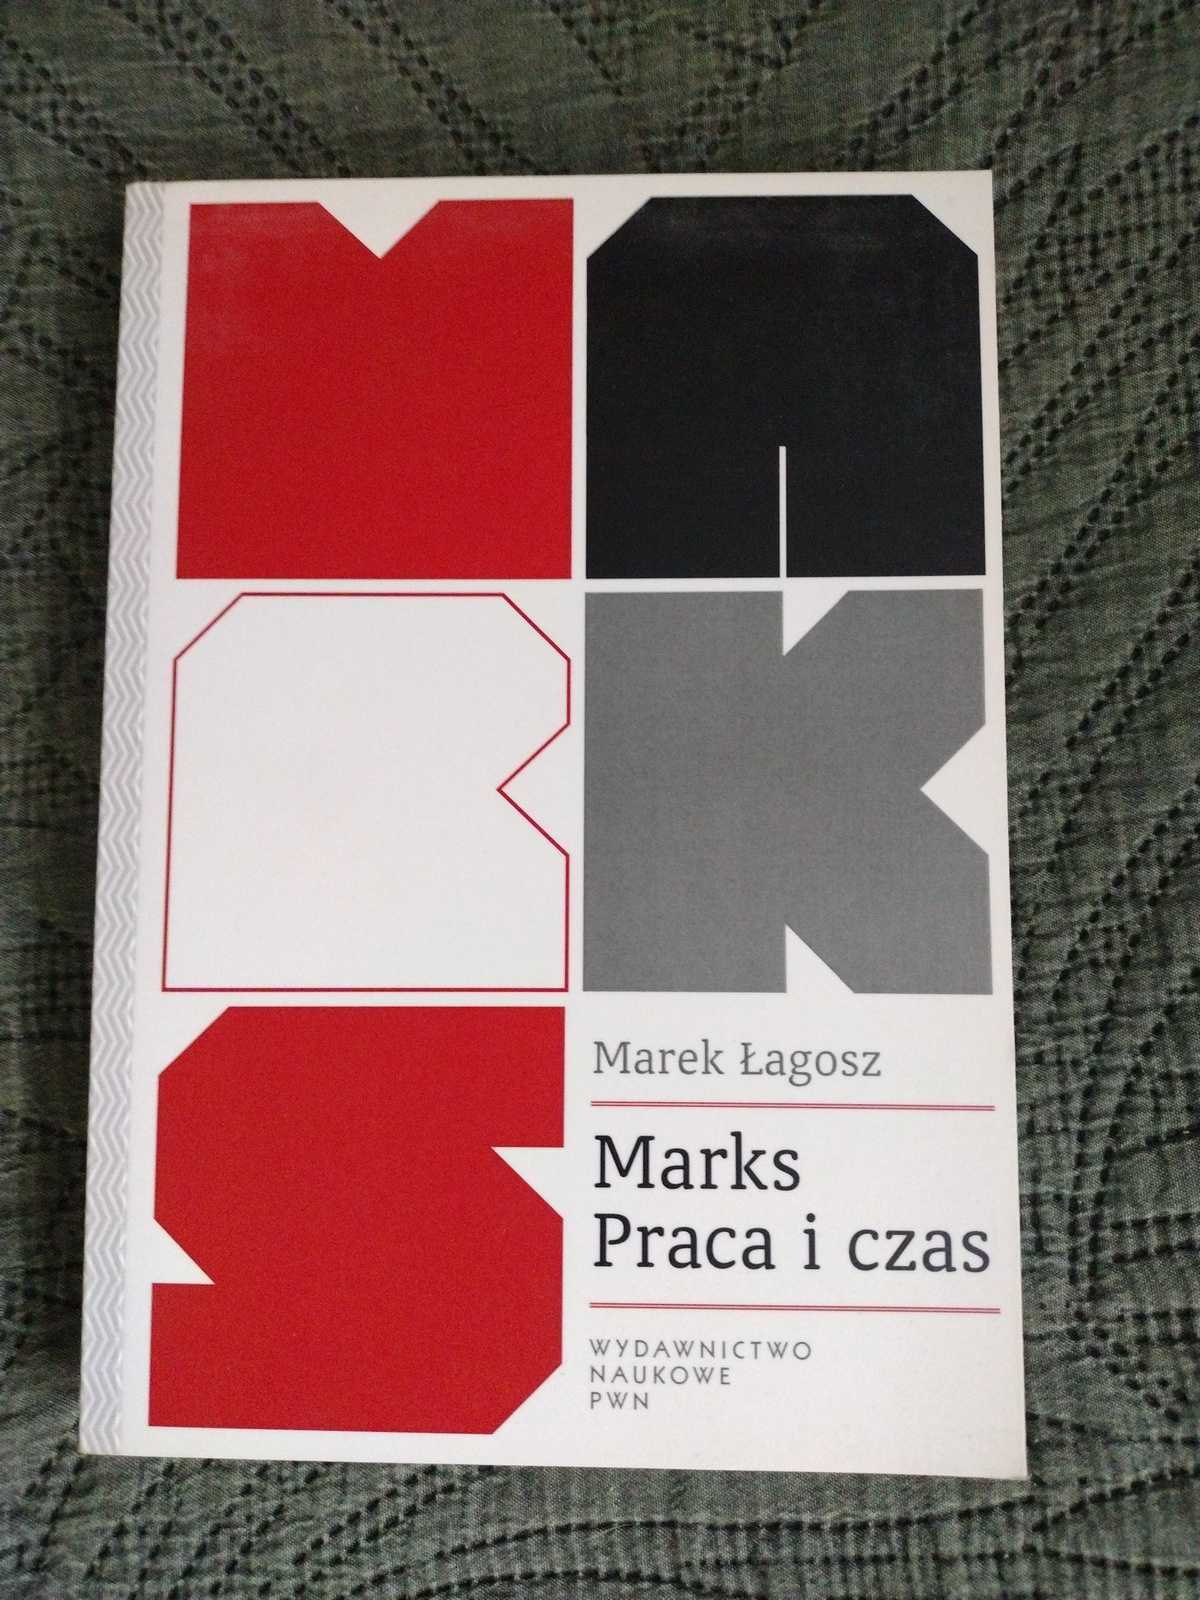 Marek Łagosz - Marks, praca i czas